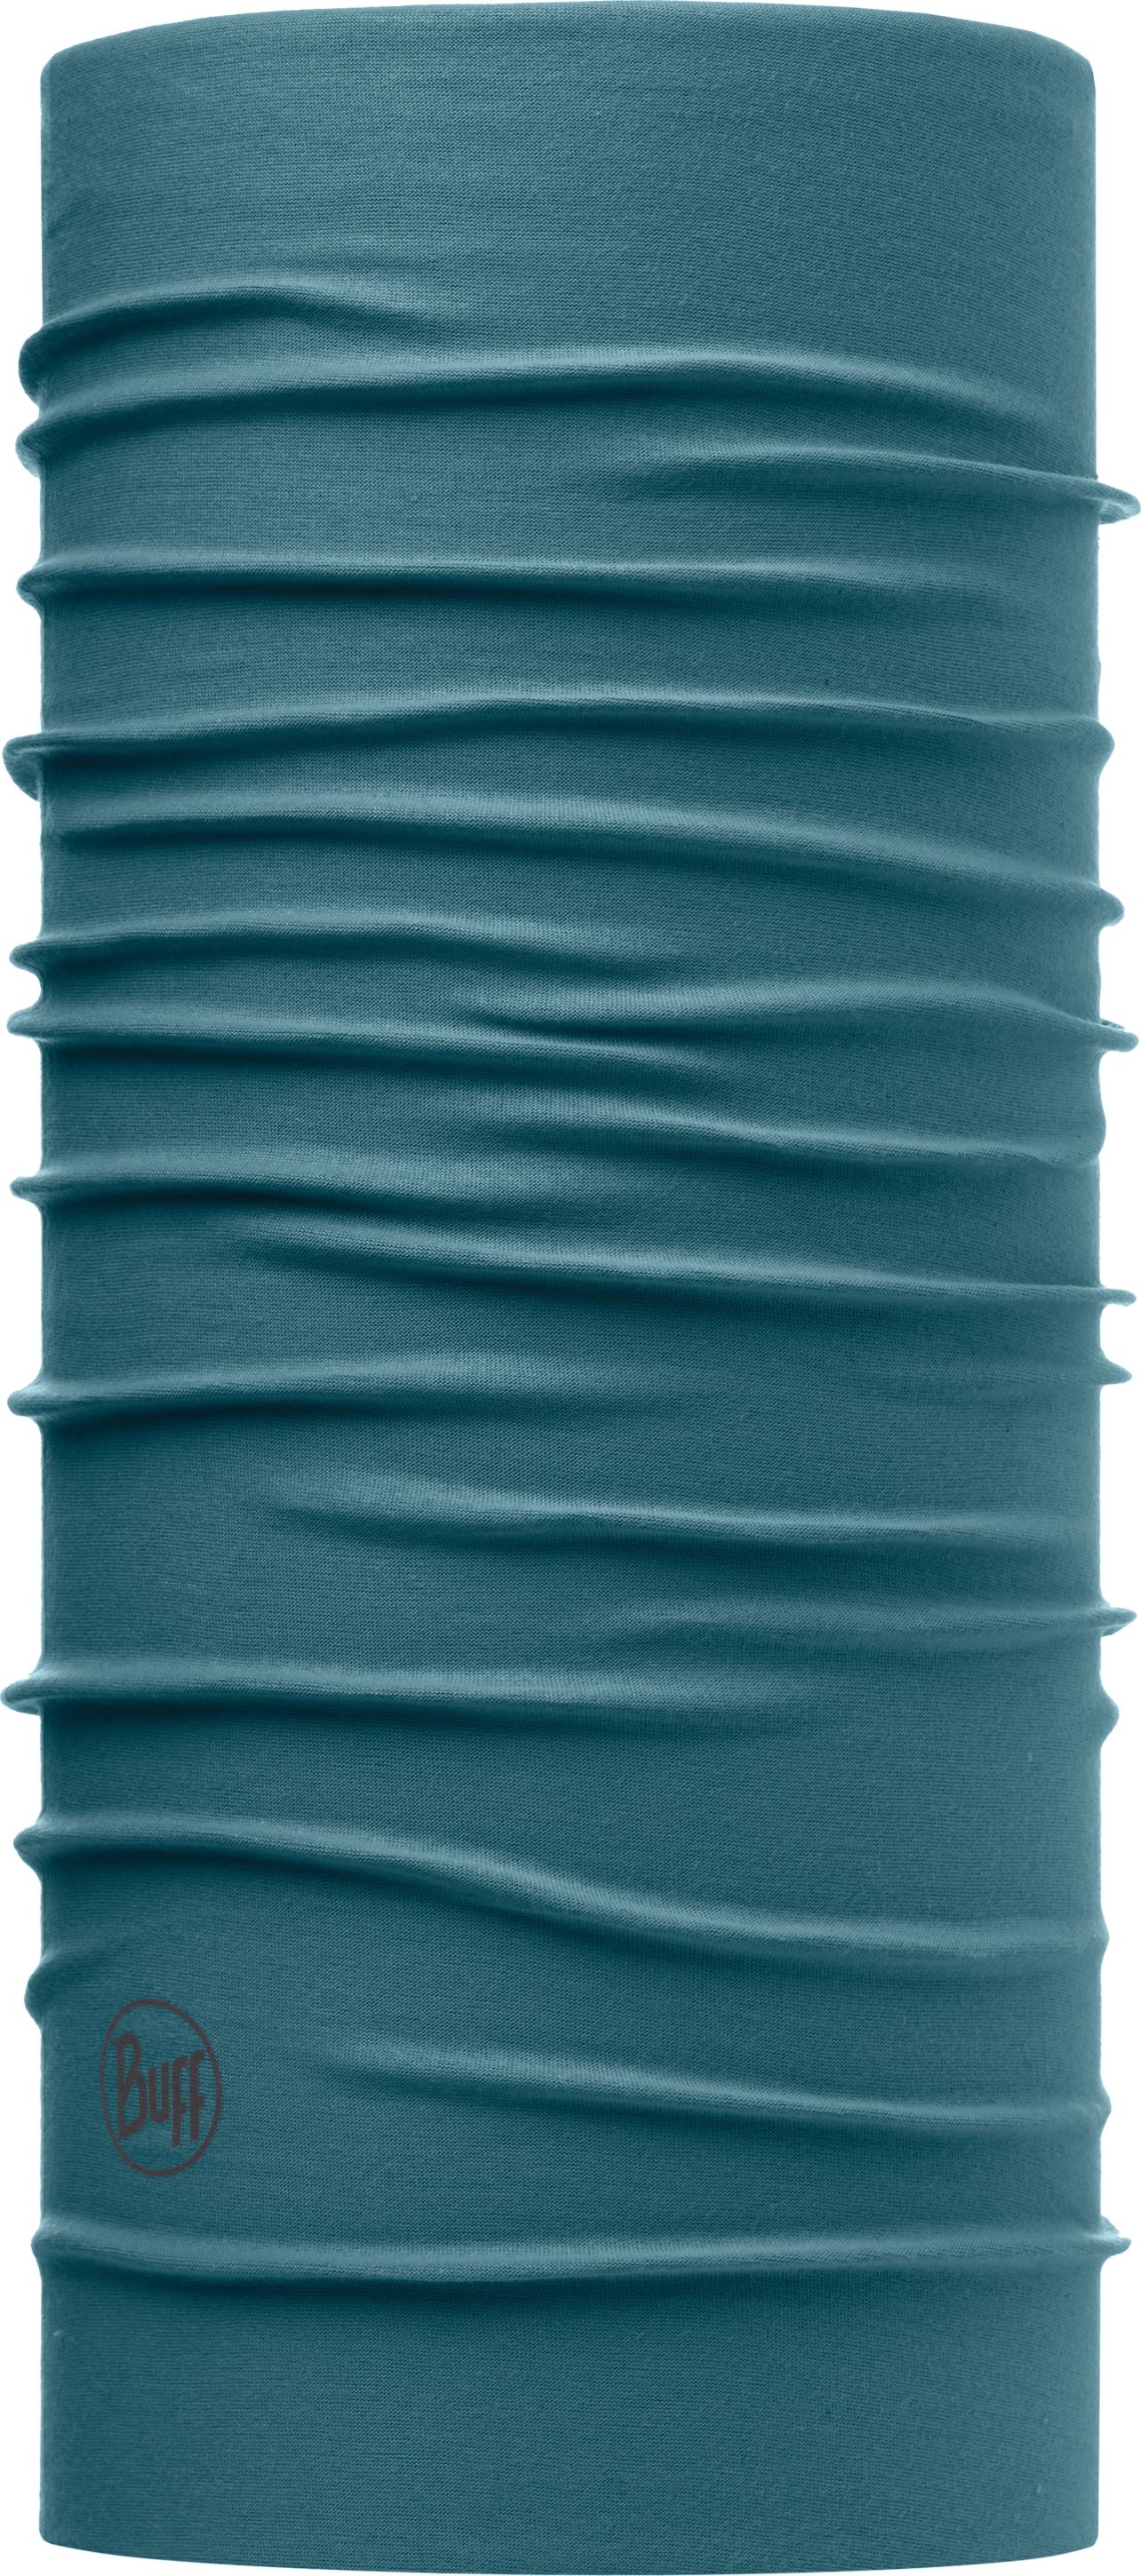 Бандана Buff UV Insect Shield Protection Solid Deepteal Blue, цвет: синий. 111427.710.10.00. Размер универсальный